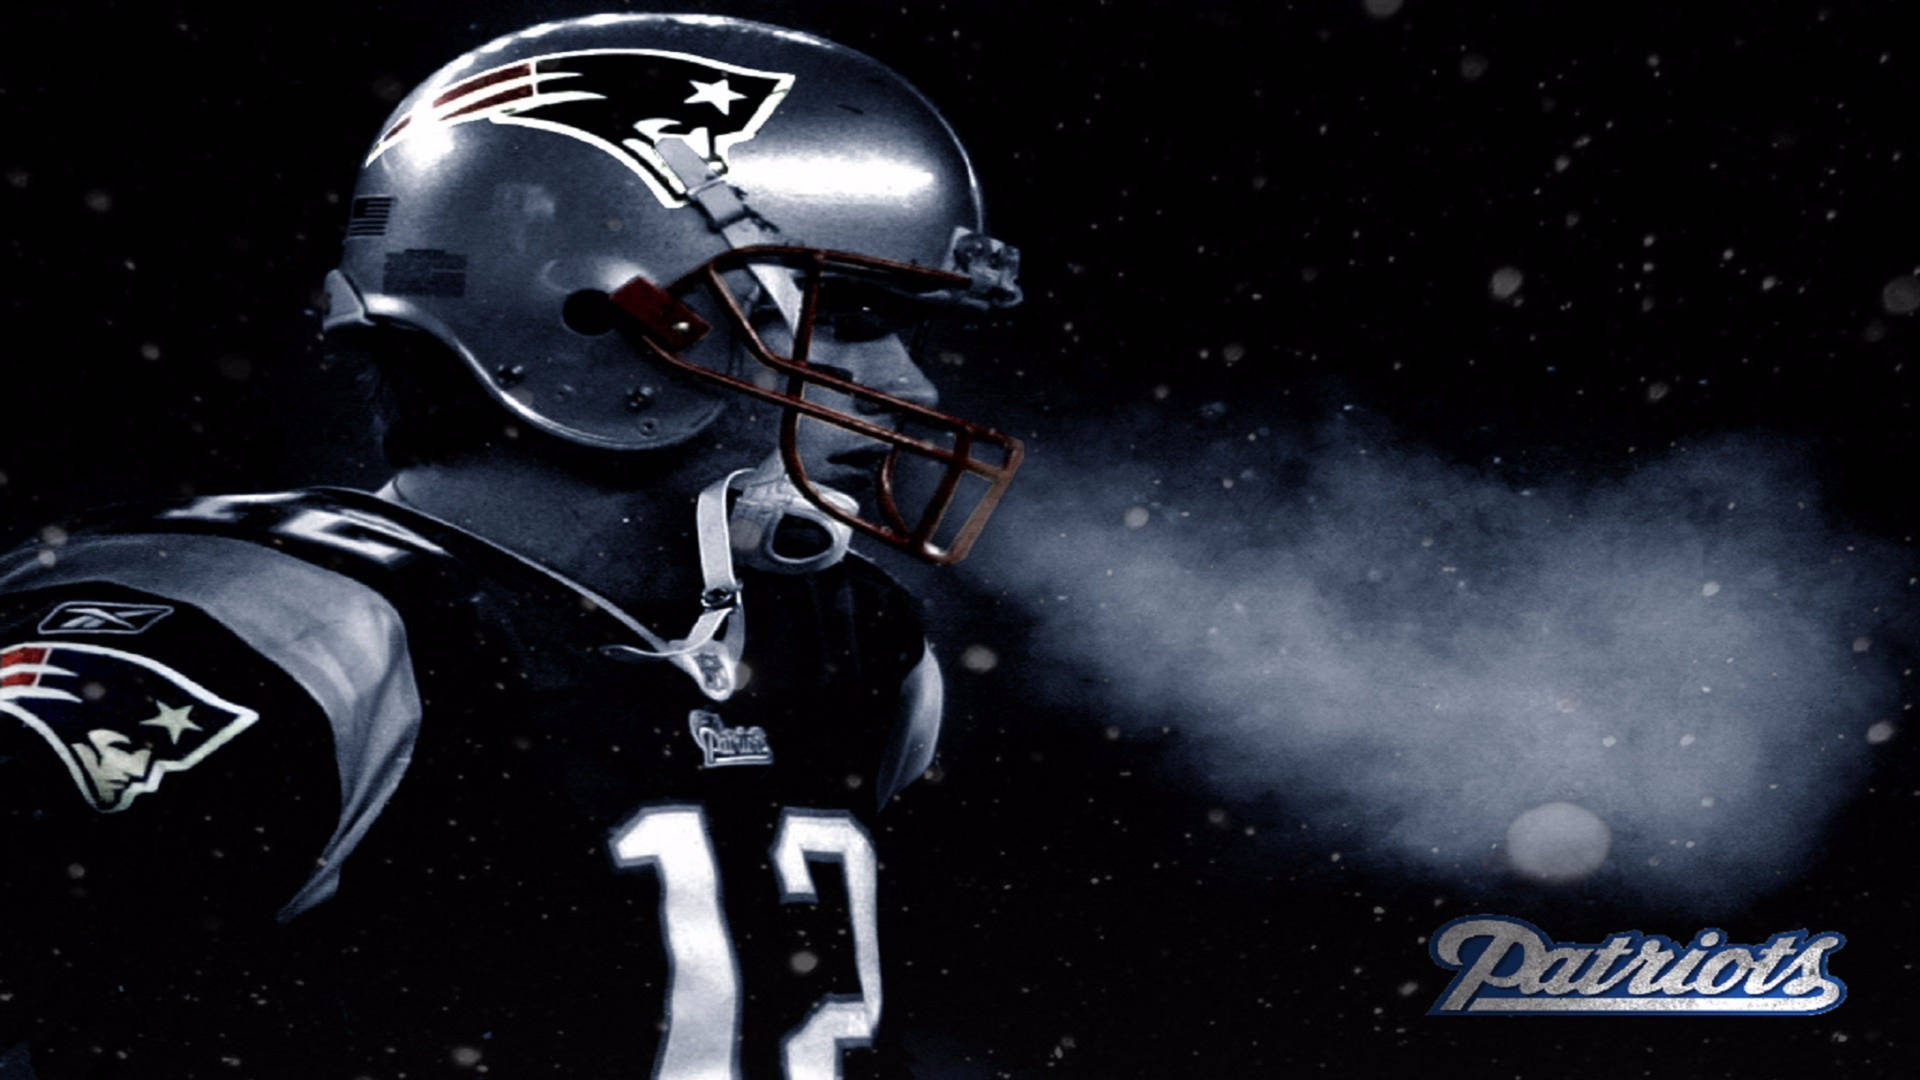 Patriots Tom Brady Background